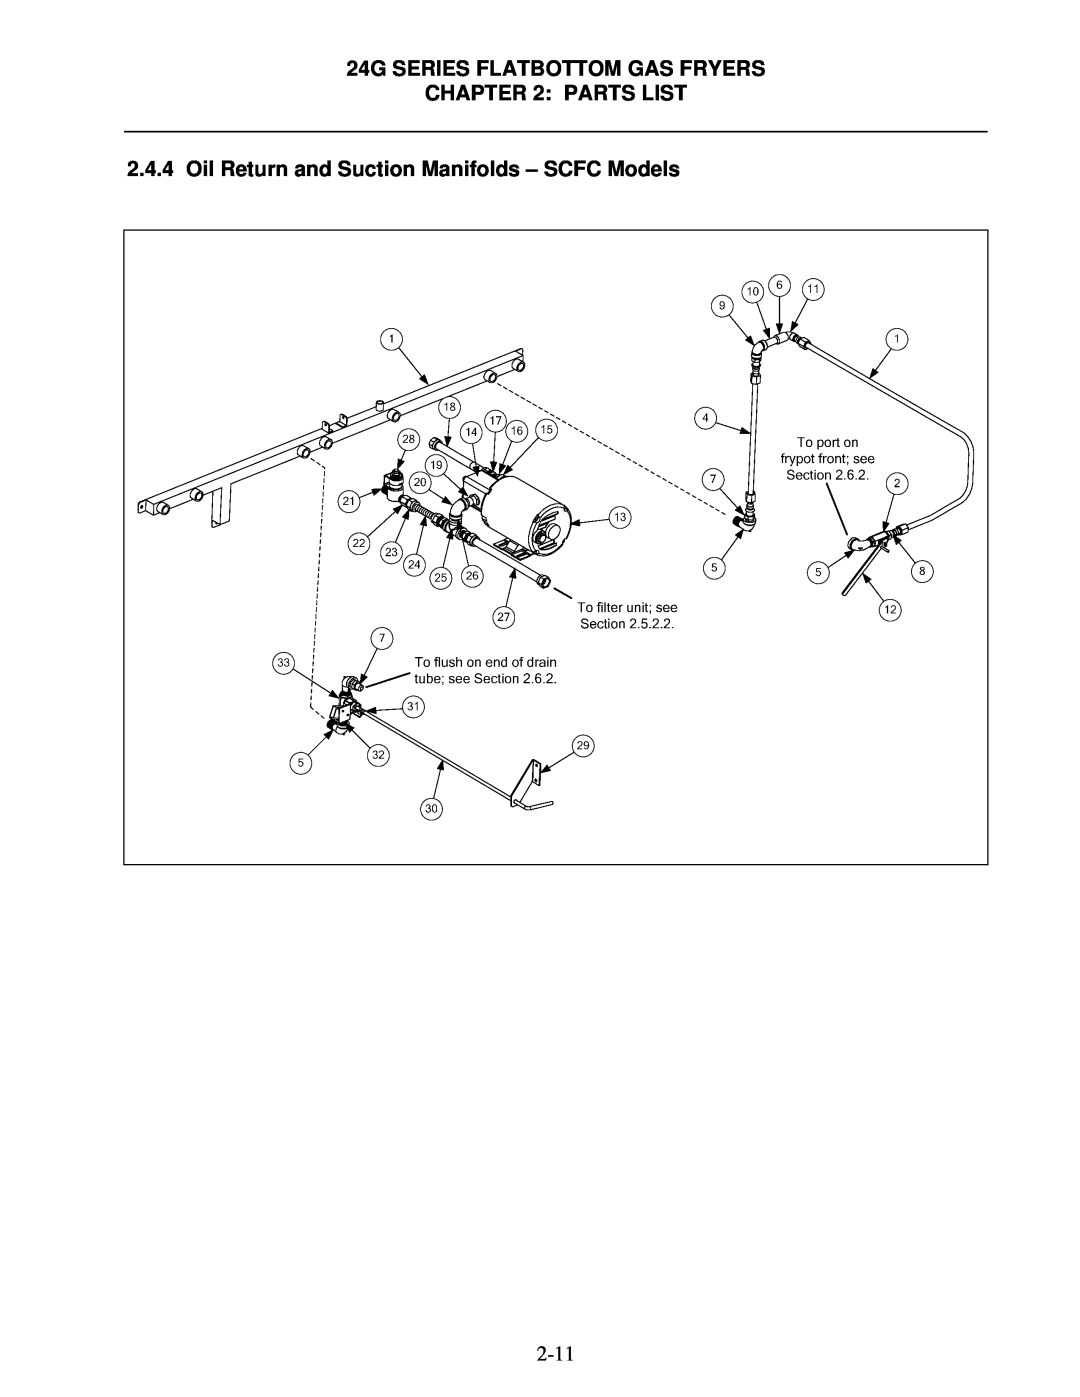 Frymaster 1824/2424G manual Oil Return and Suction Manifolds - SCFC Models, 24G SERIES FLATBOTTOM GAS FRYERS PARTS LIST 